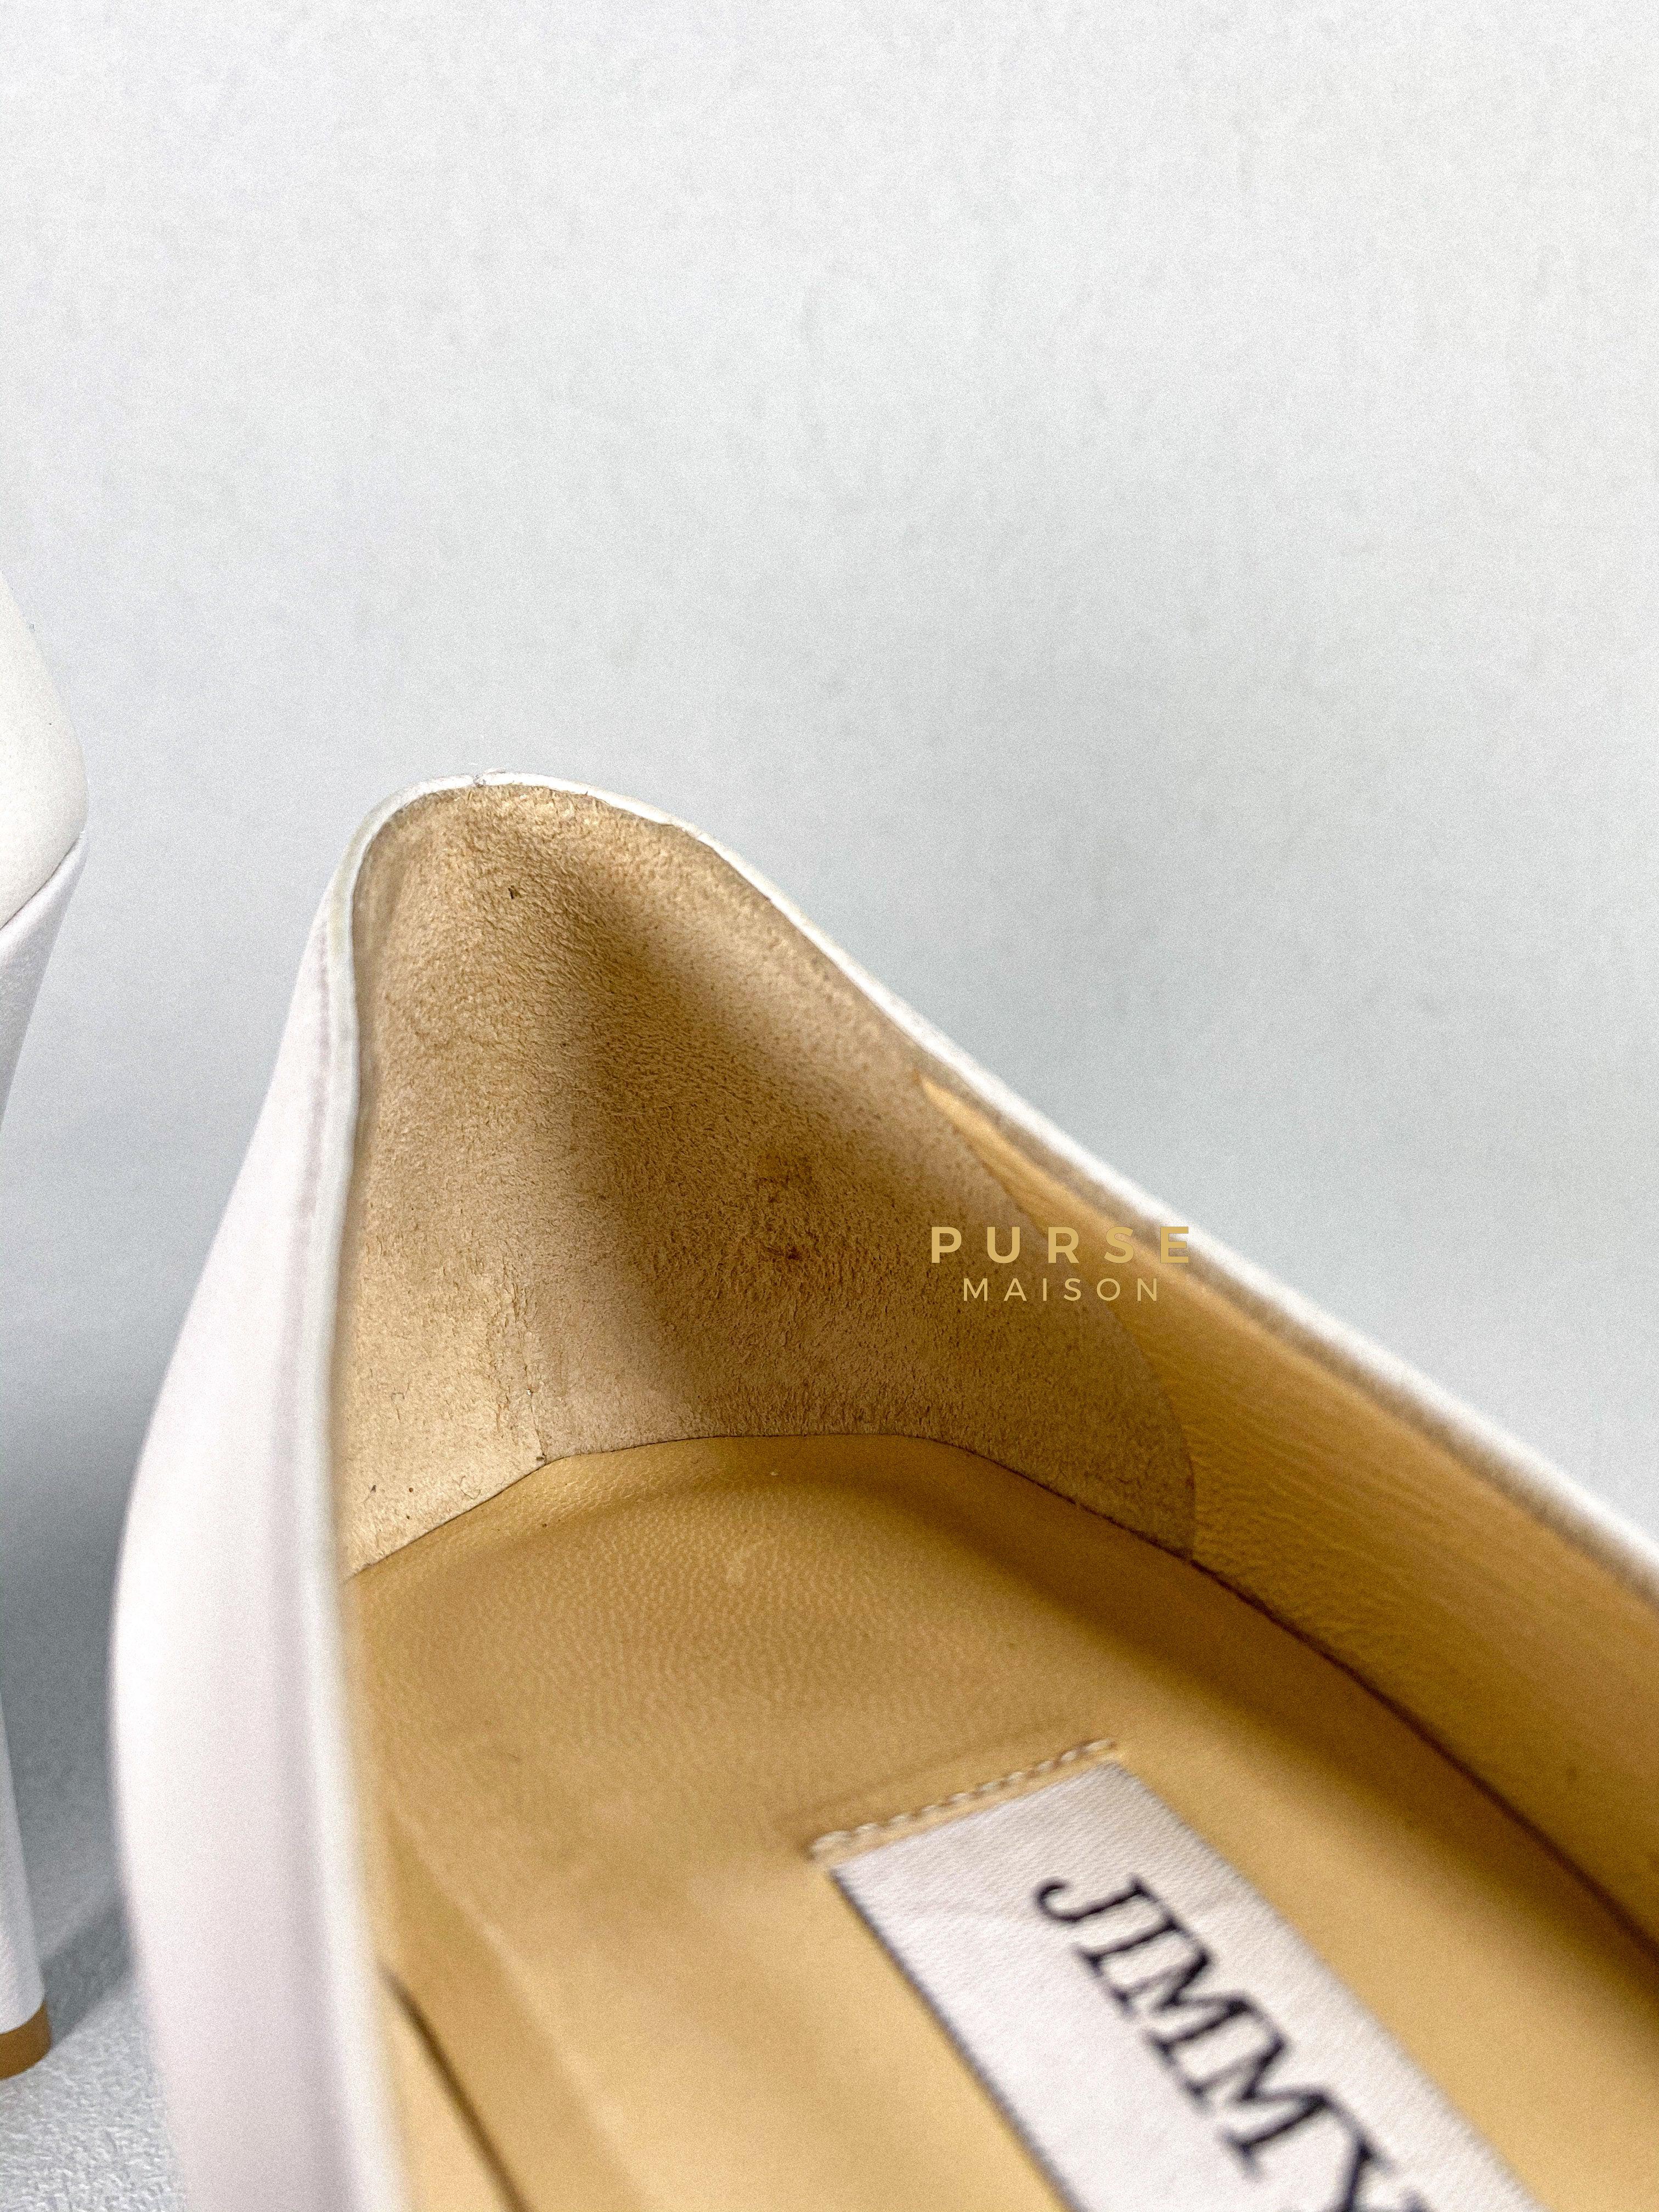 Jimmy Choo Anouk 120 Leather White/Silver Nappa Pumps High Heels Size 38.5 (27cm) | Purse Maison Luxury Bags Shop